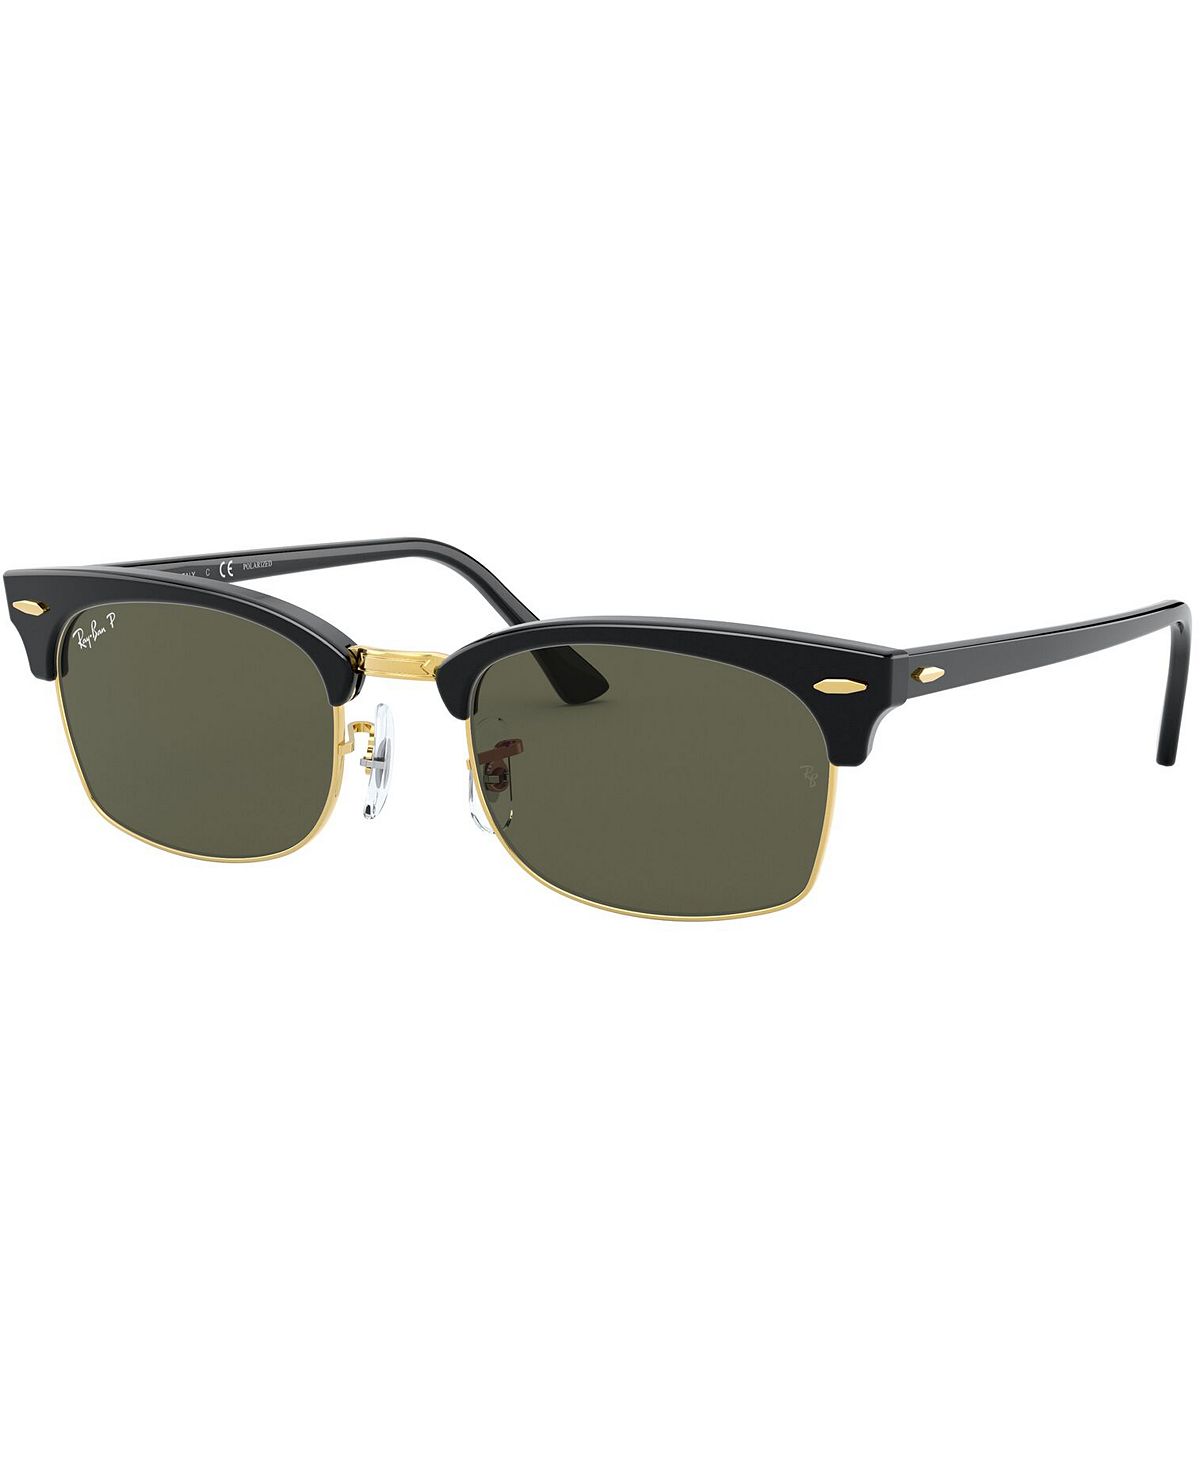 Солнцезащитные очки унисекс, RB3916 Ray-Ban солнцезащитные очки utilizer columbia цвет shiny black green green mirr